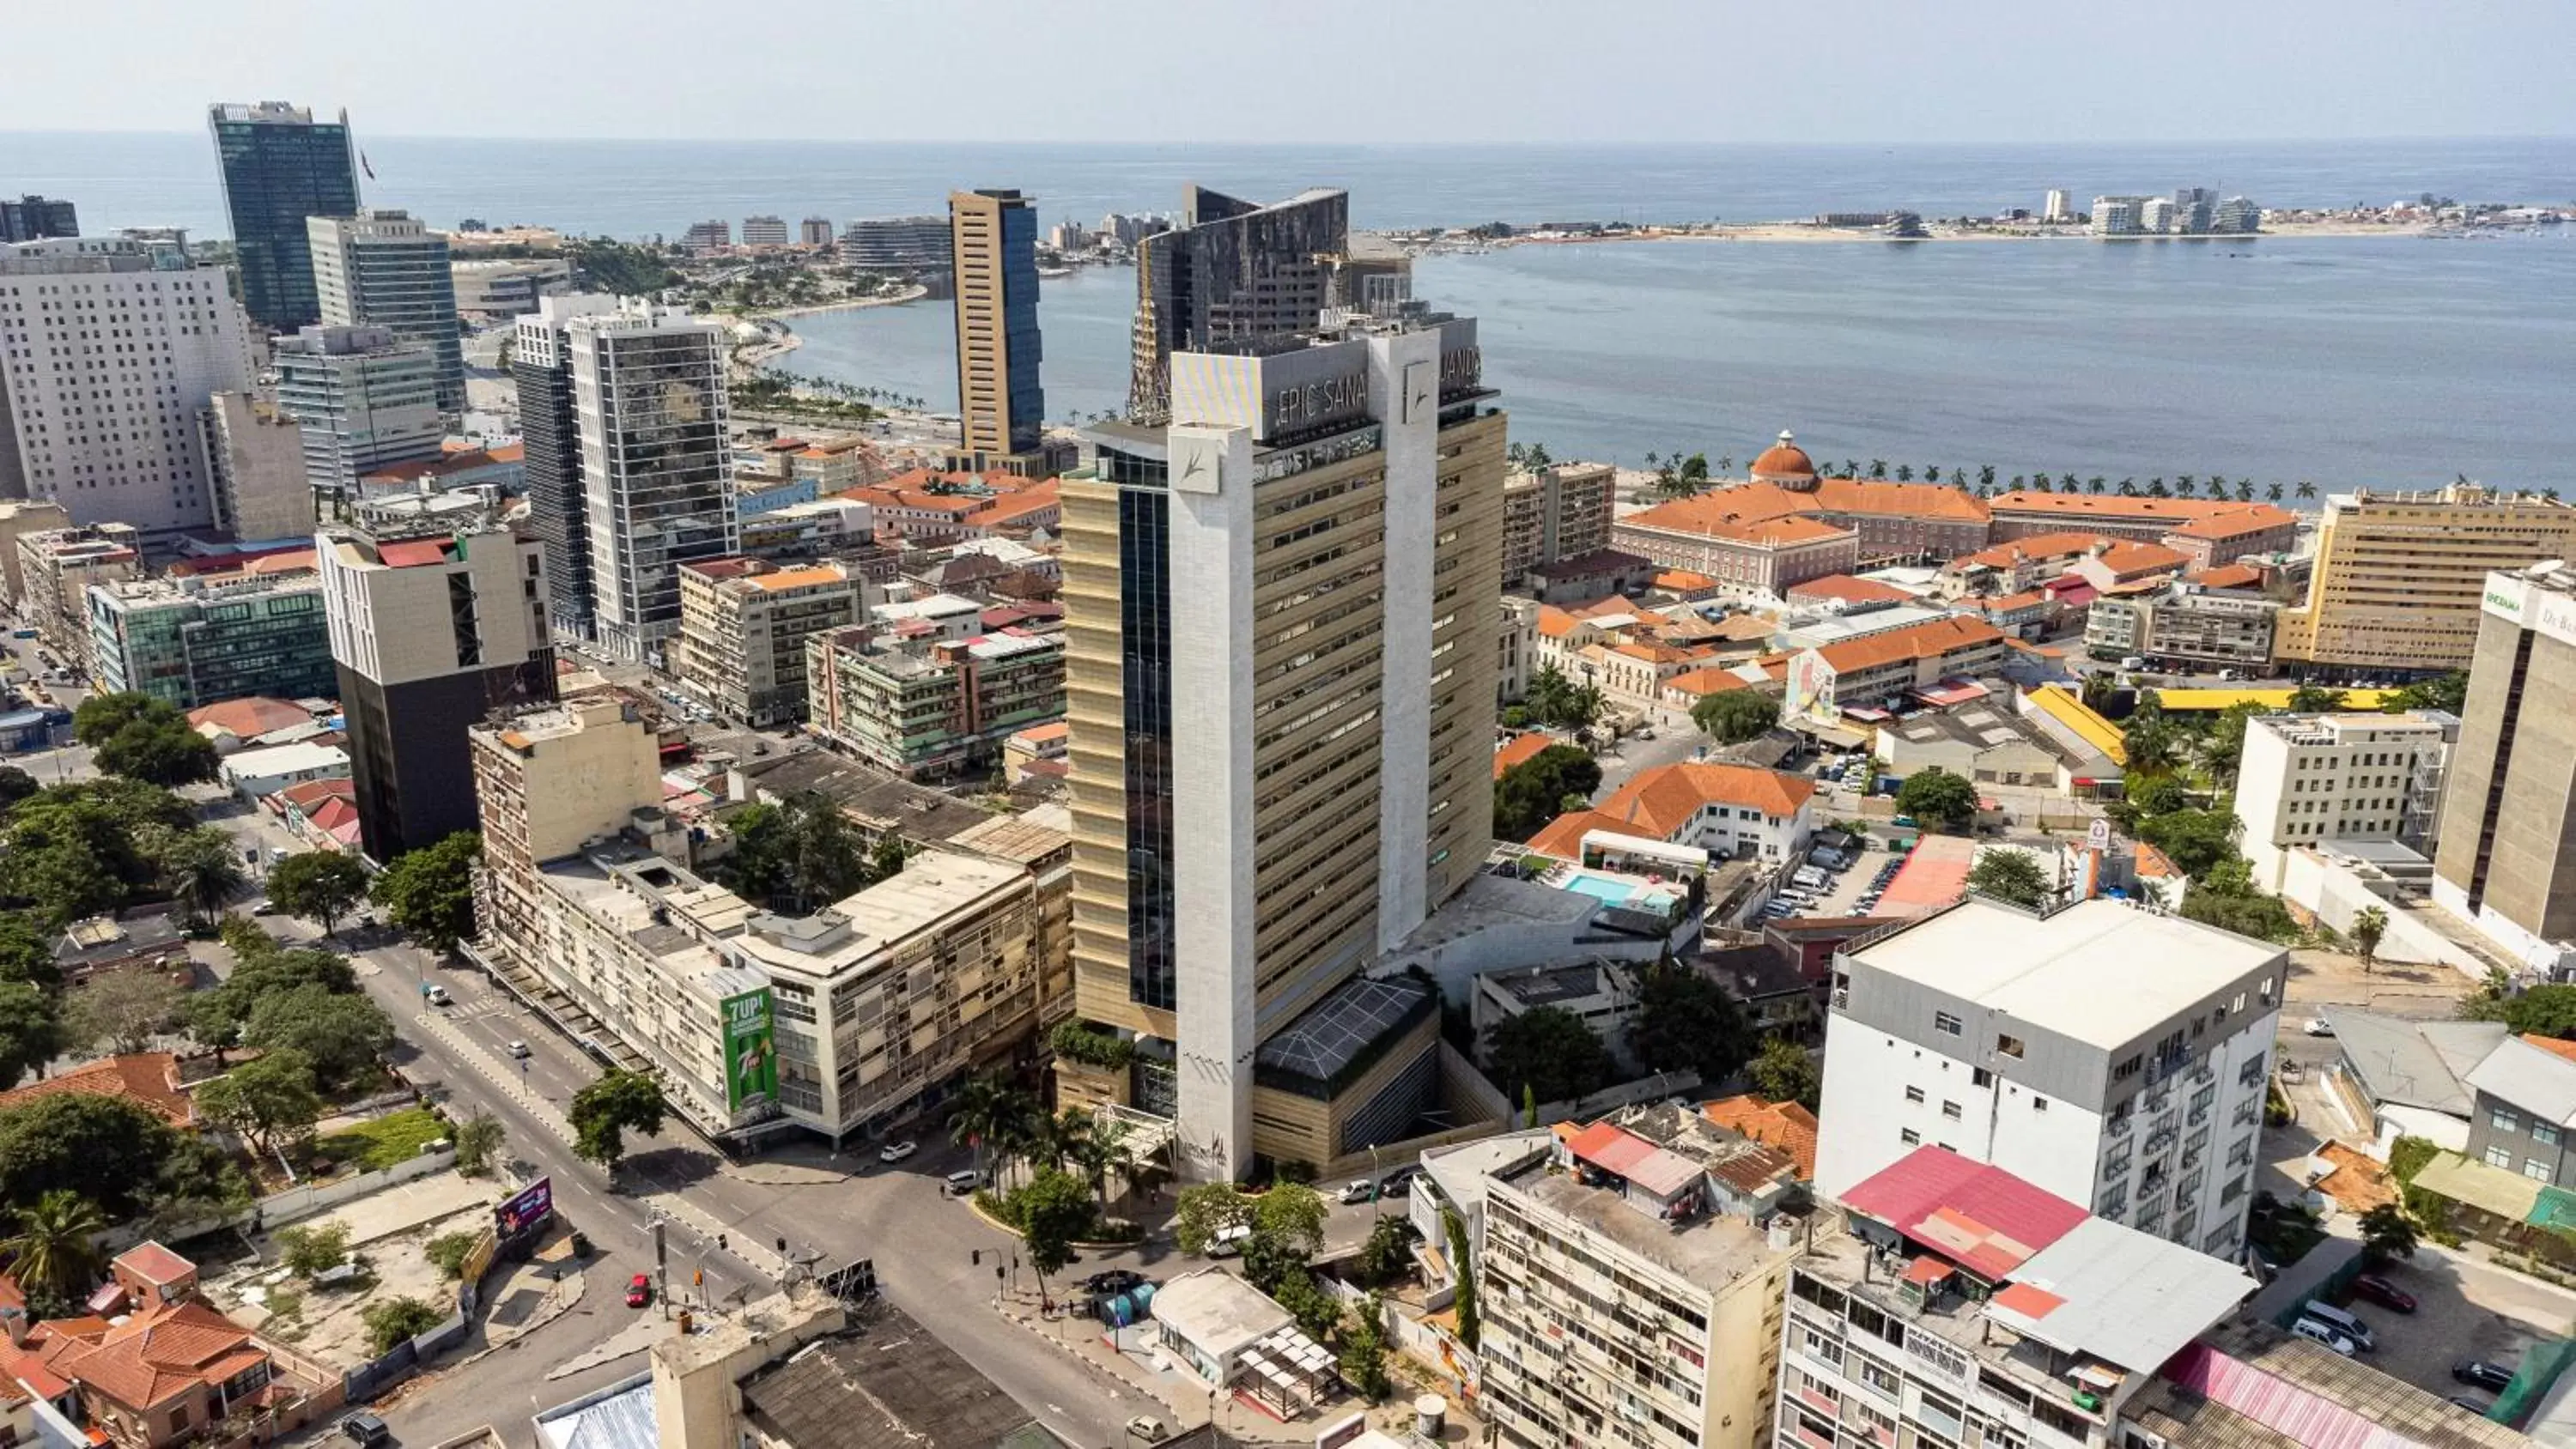 Off site, Bird's-eye View in EPIC SANA Luanda Hotel